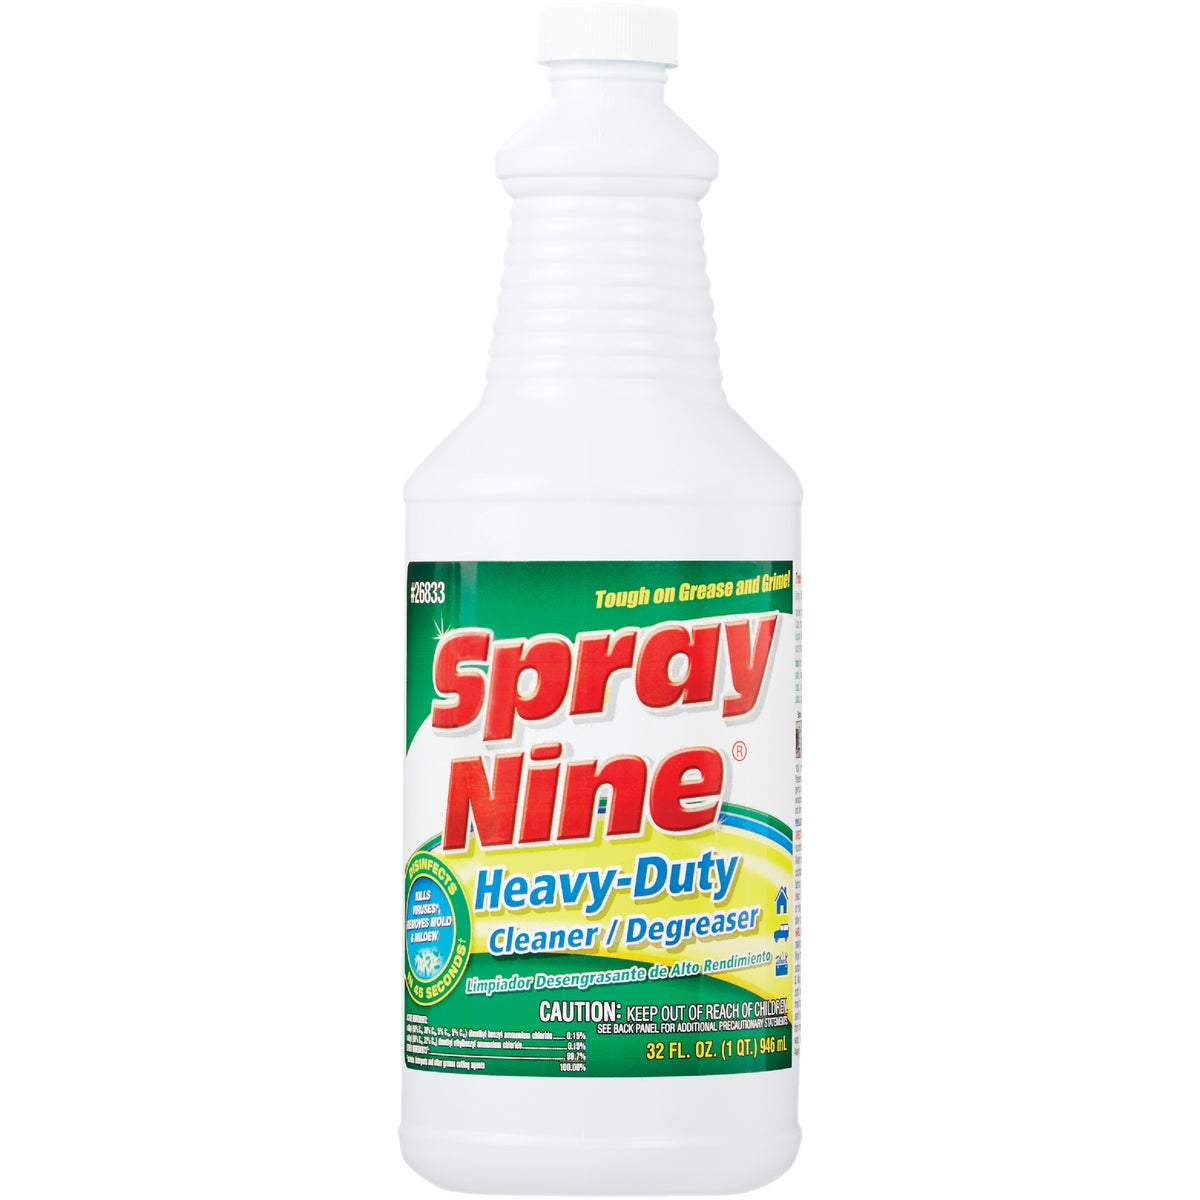 Spray Nine 32 Oz. Heavy-Duty Cleaner & Degreaser Refill